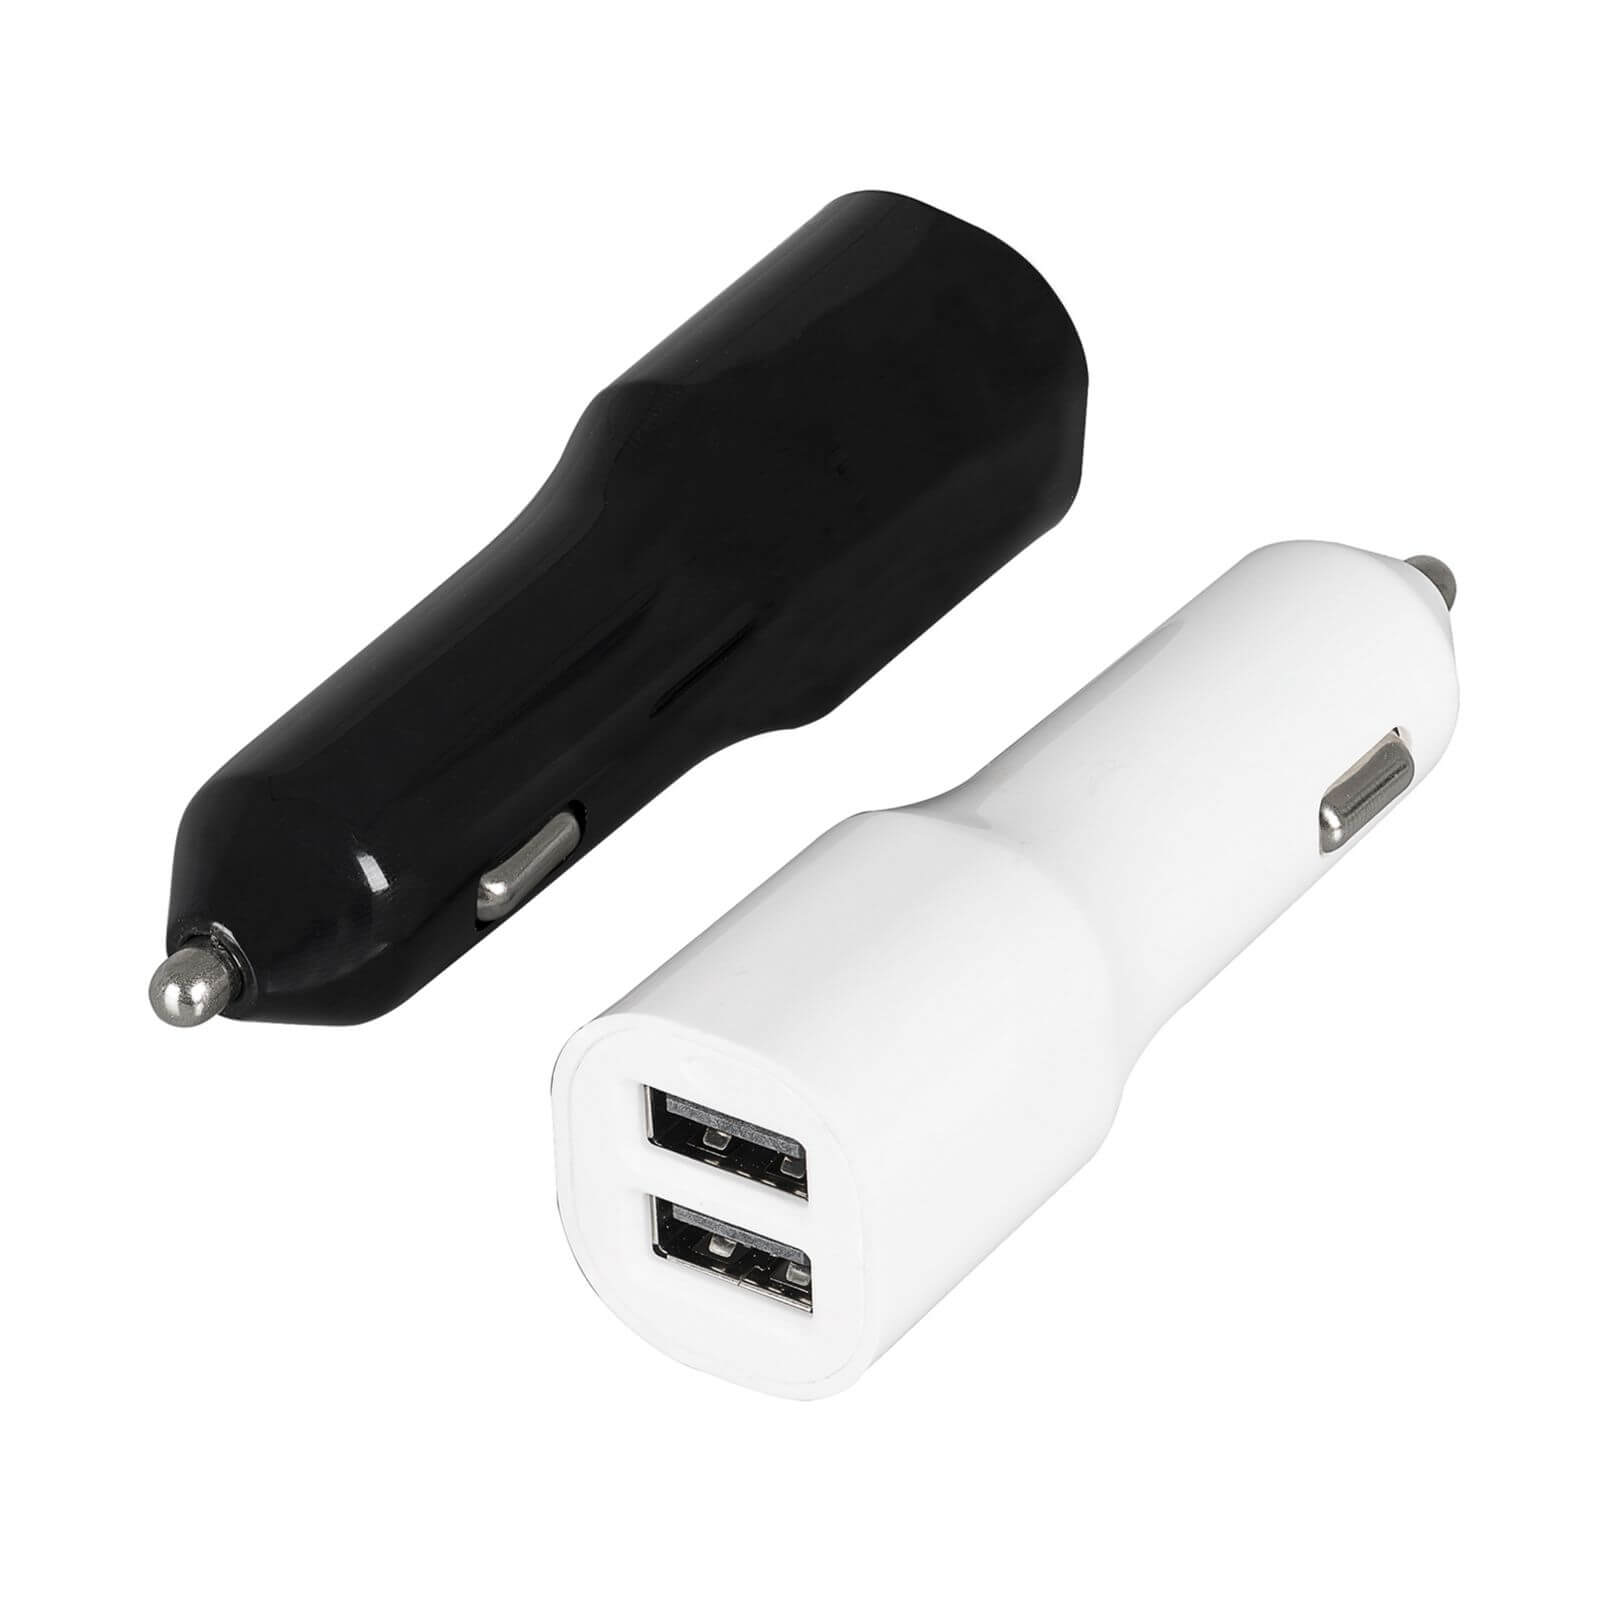 Antsig Dual Port USB Car Charger 4.8A